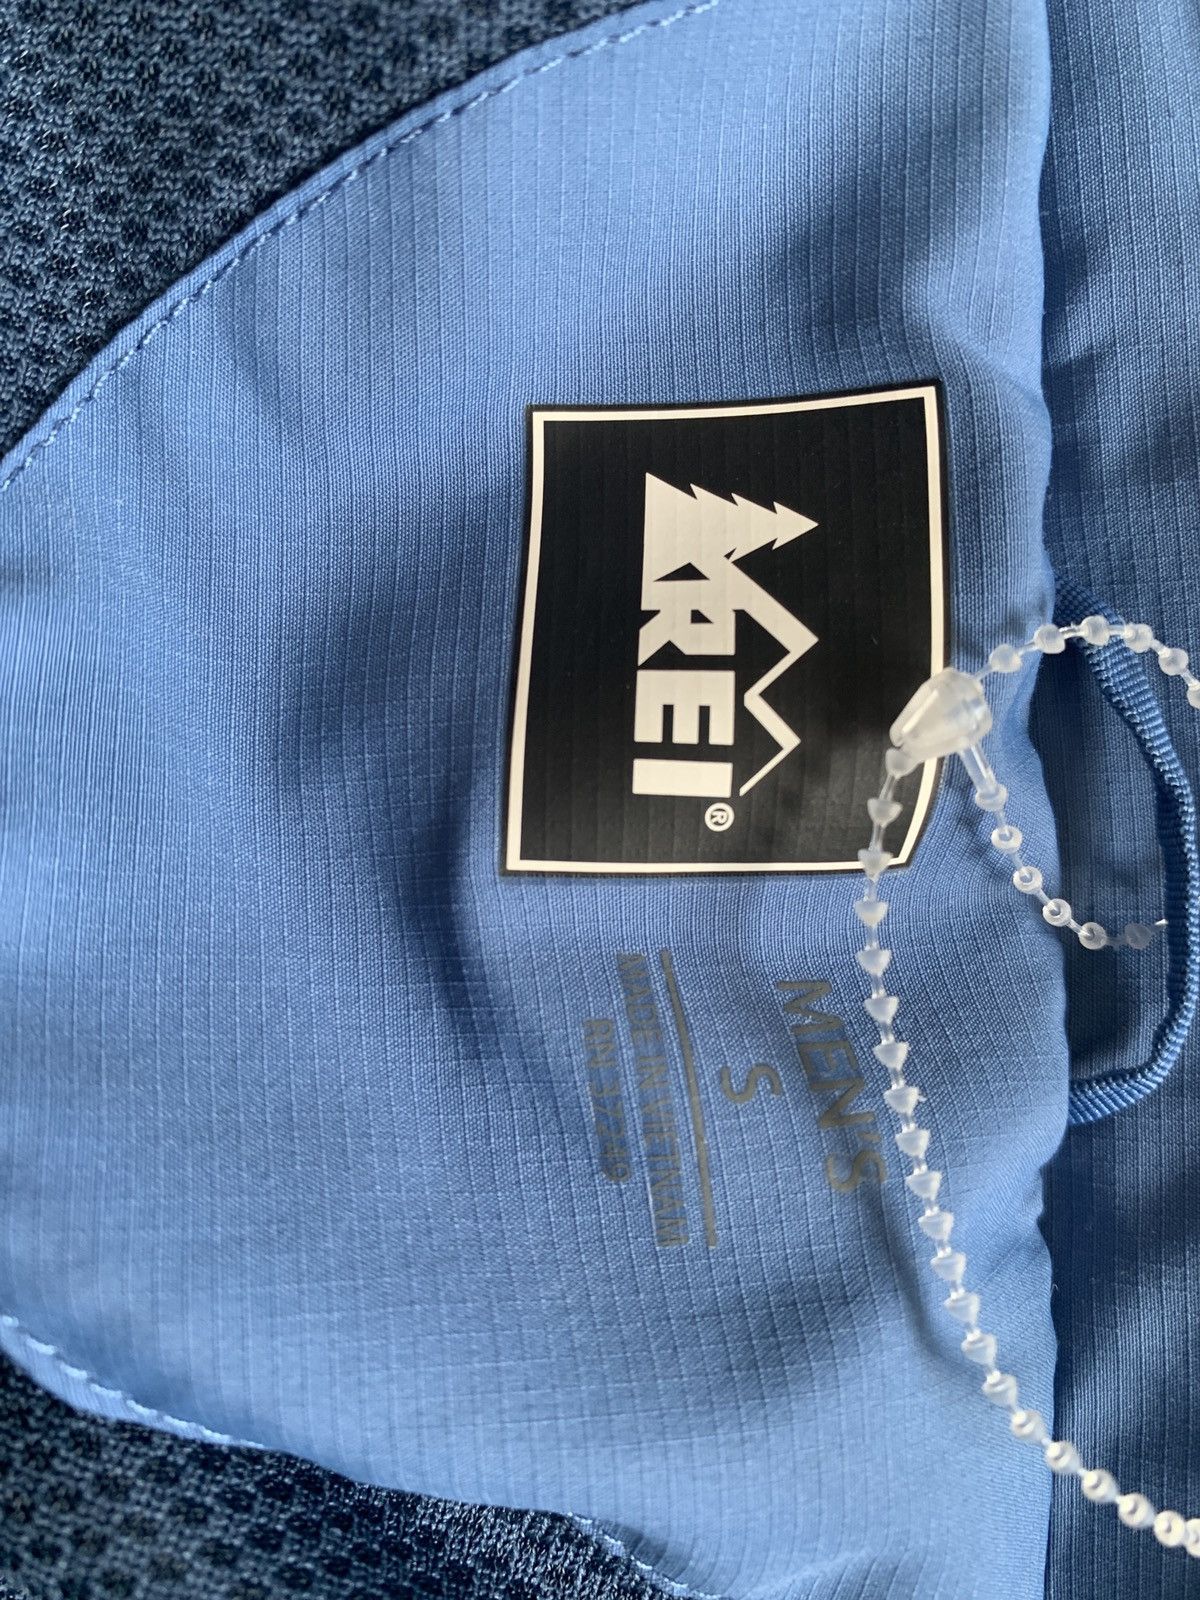 Rei Rei Raincoat Jacket (Blue) Size US S / EU 44-46 / 1 - 10 Thumbnail